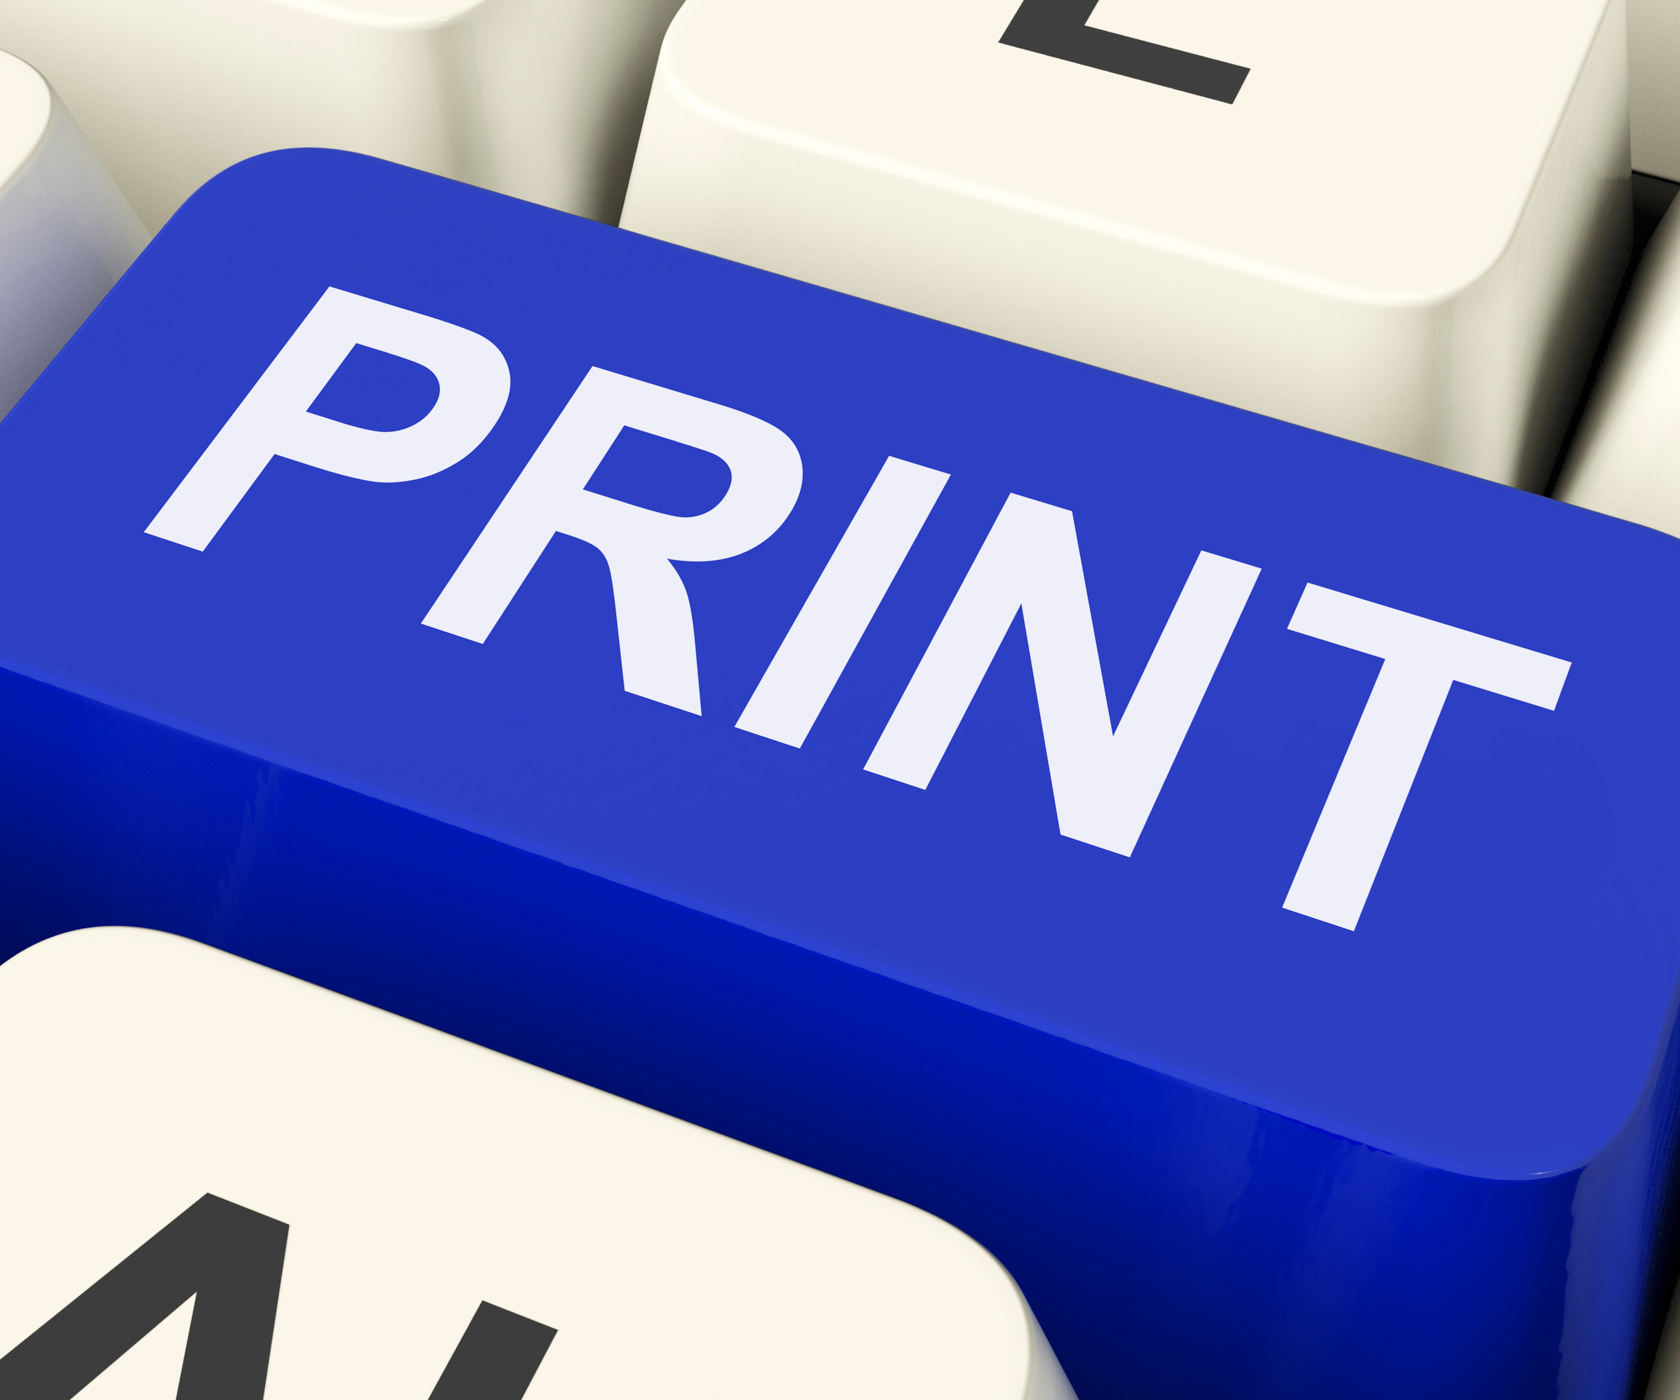 Print key shows printer printing or printout photo